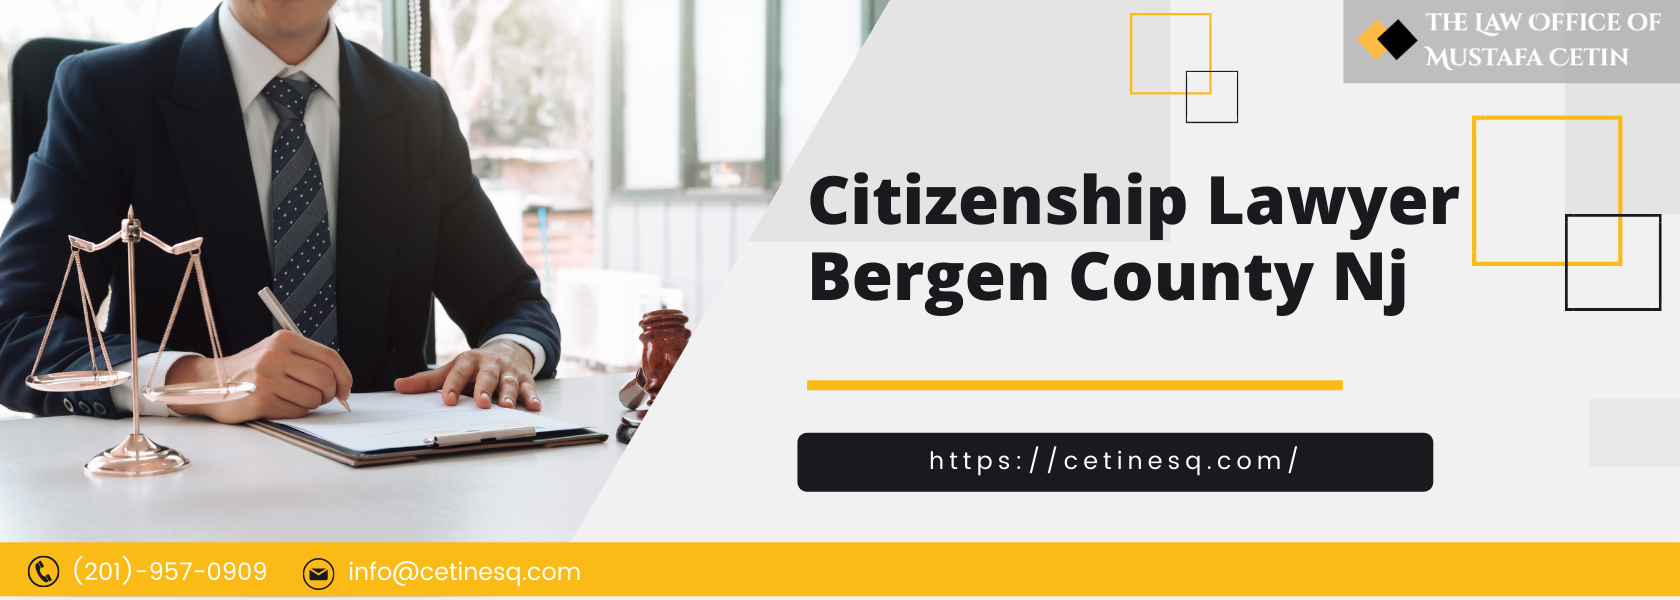 Citizenship Lawyer Bergen County Nj